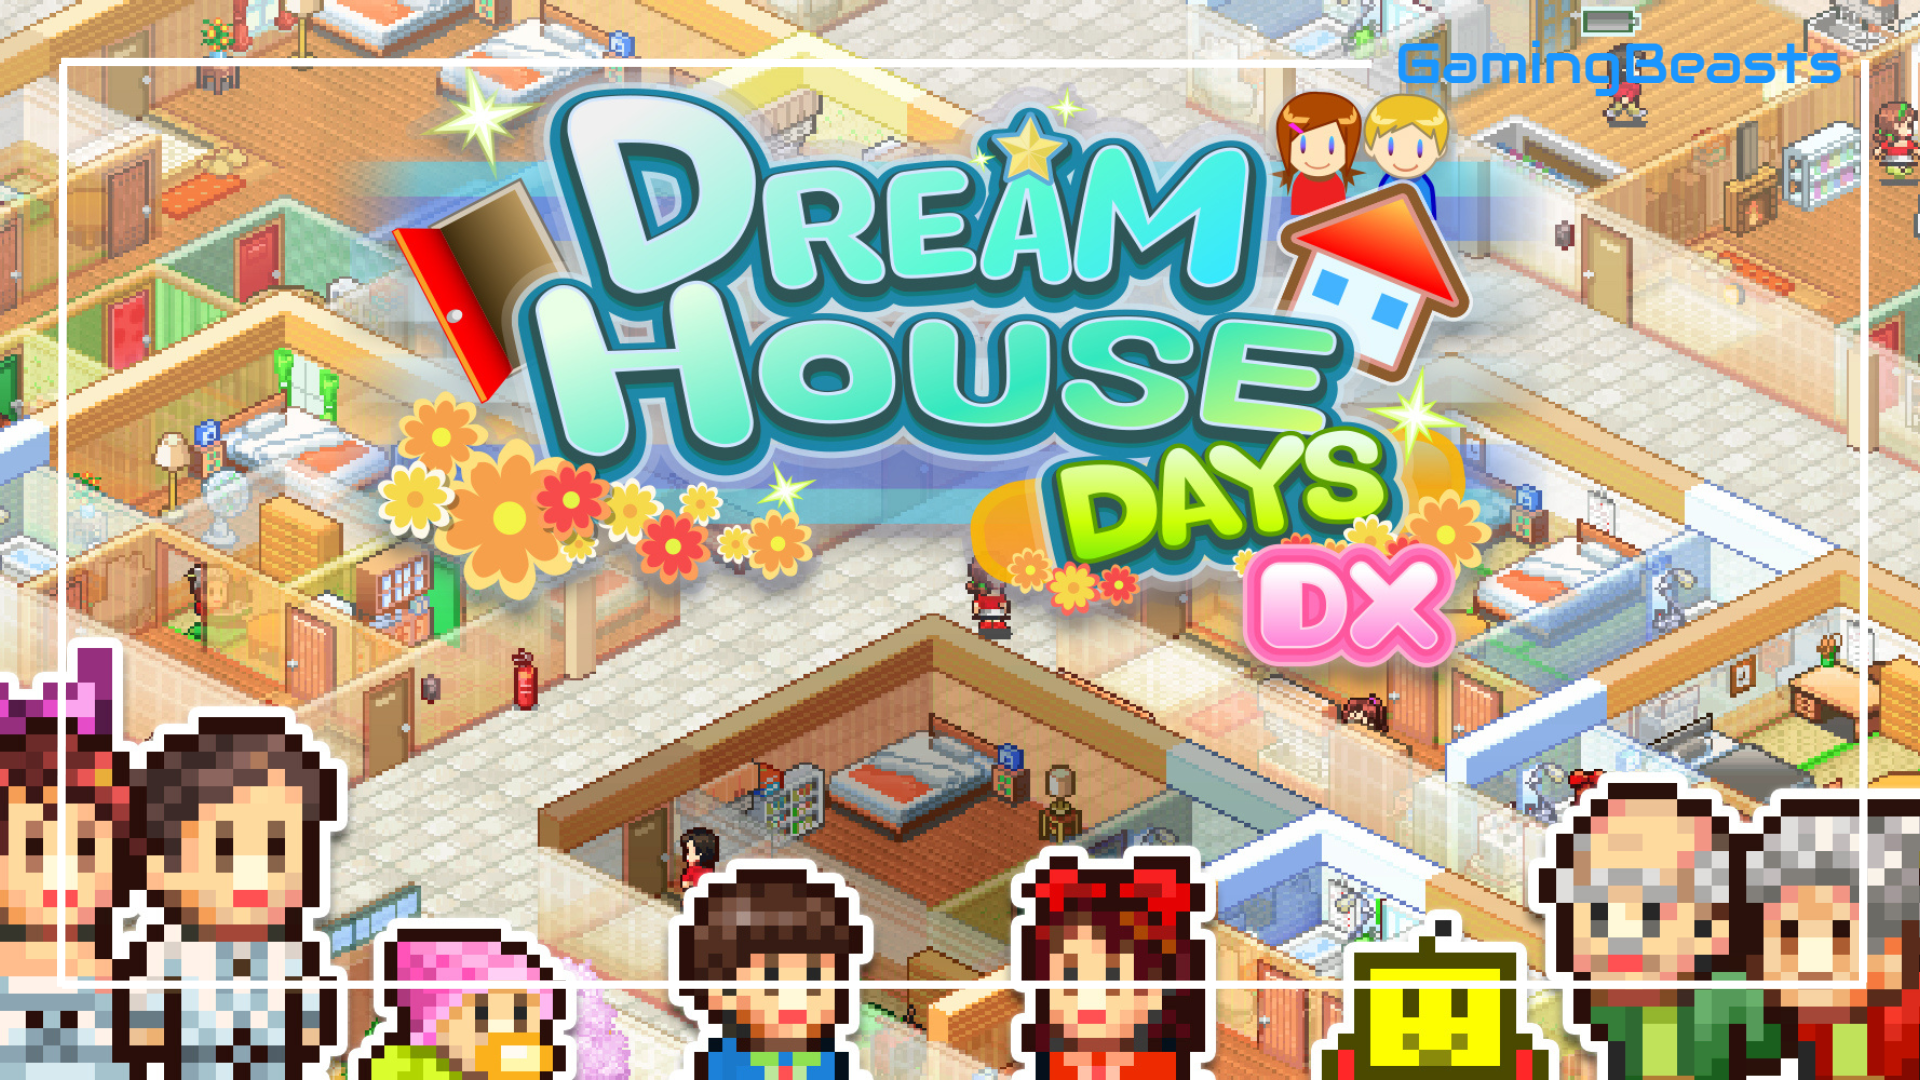 Dream House Days. Dream House Days комнаты. Dream House Days 6.0. Dream DX.